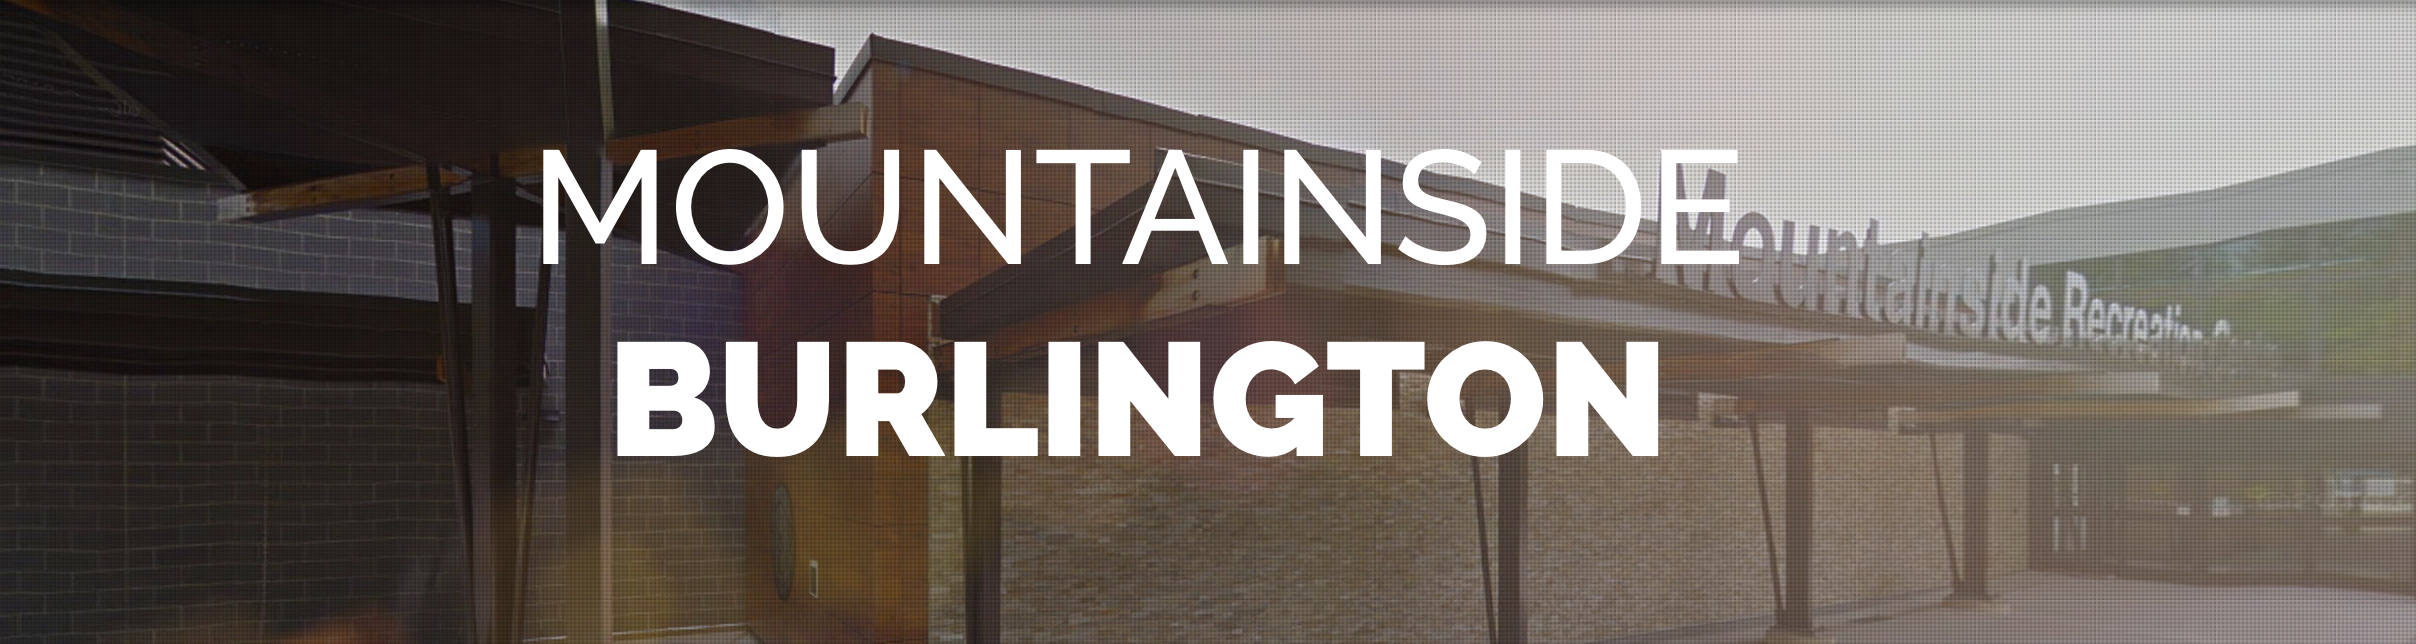 Explore Burlington - Mountainside neighbourhood with The Mink Group real estate.